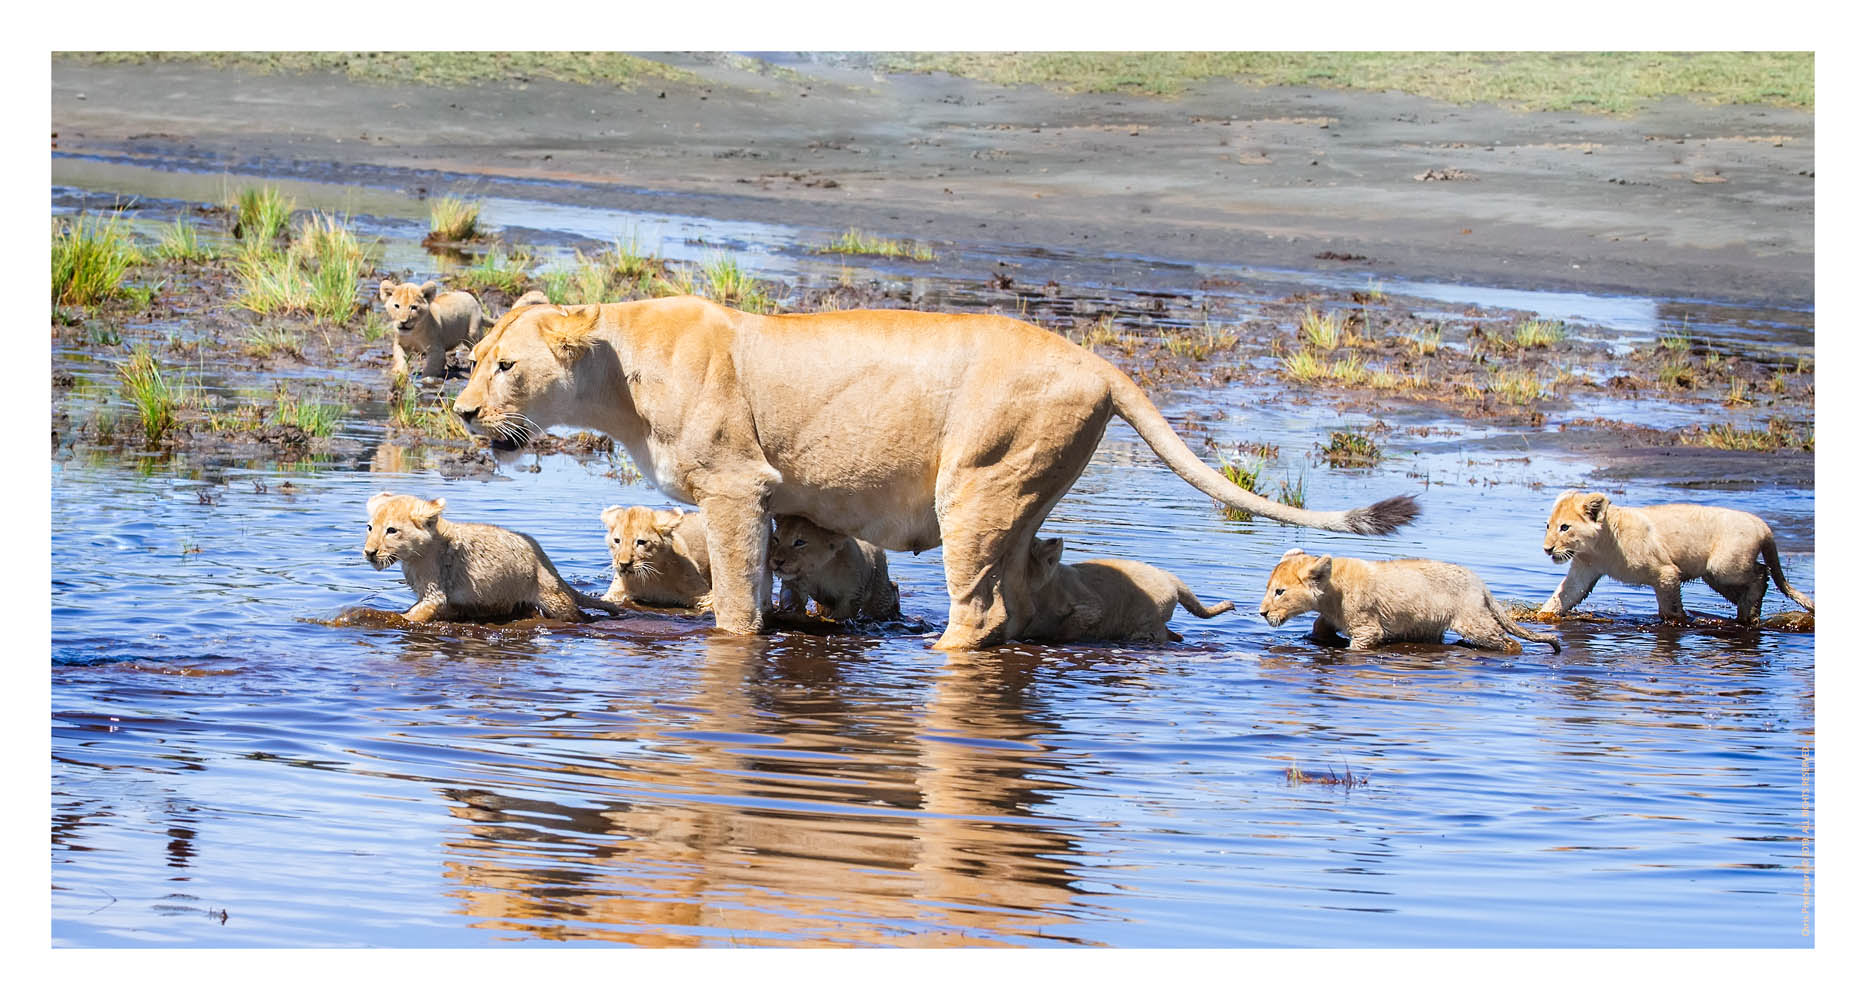 Lion cubs at Ndutu, Tanzania Feb. 2016